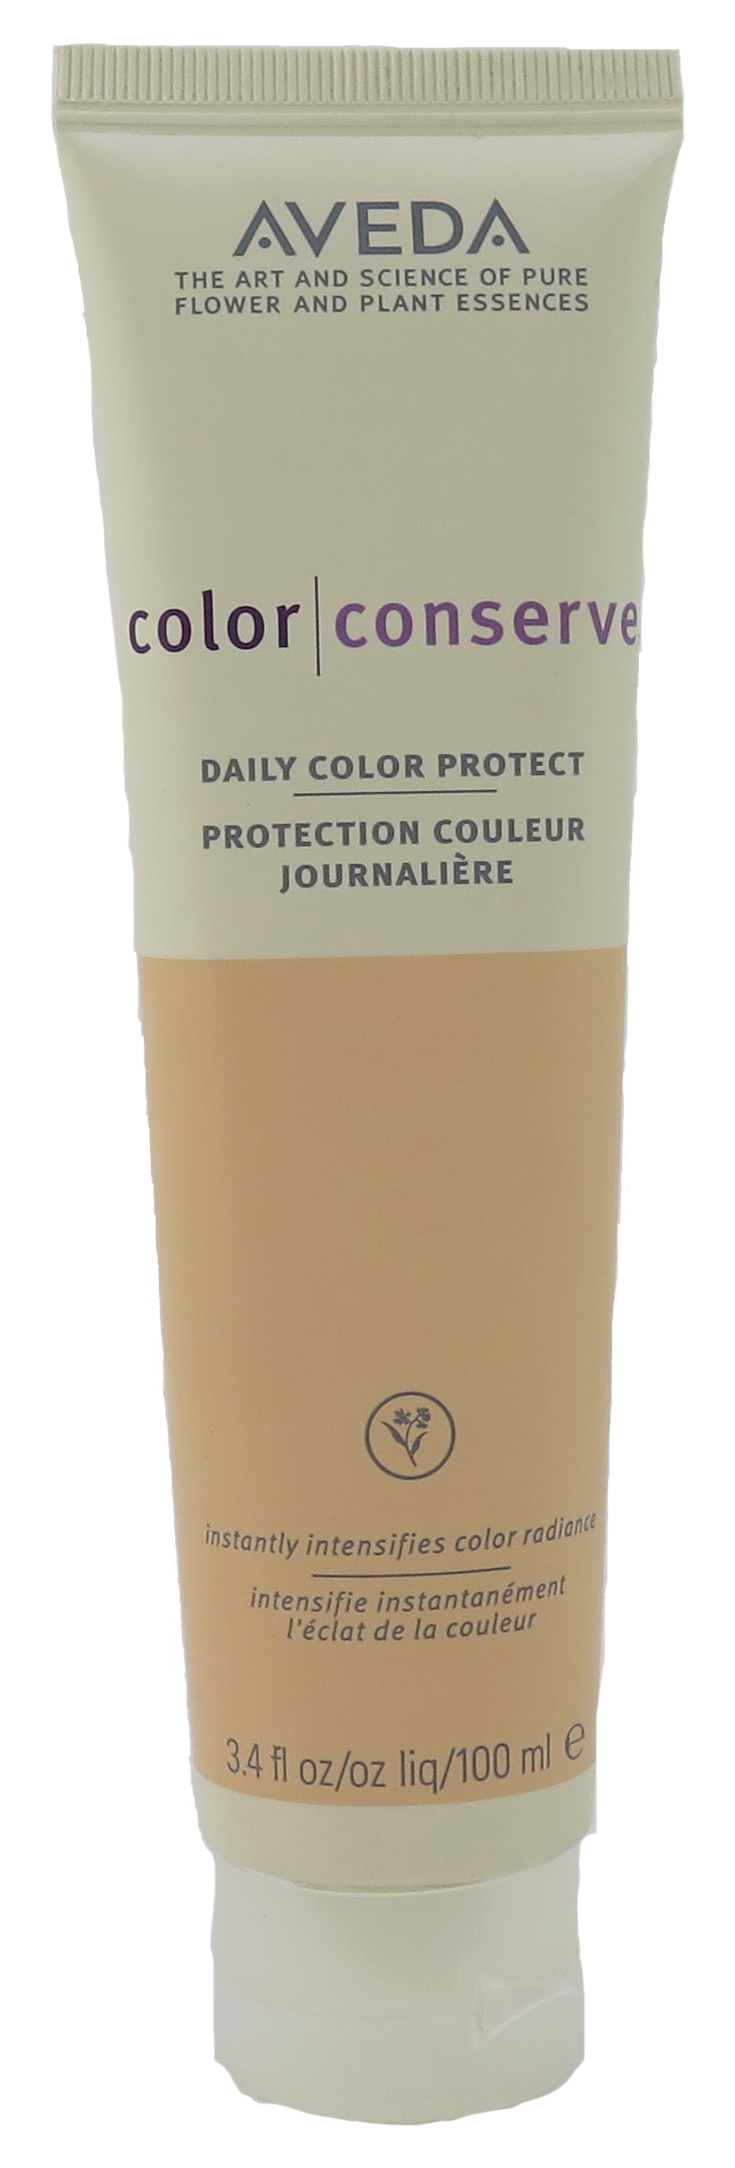 Aveda Color Conserve Daily Color Protect 3.4 Fl oz